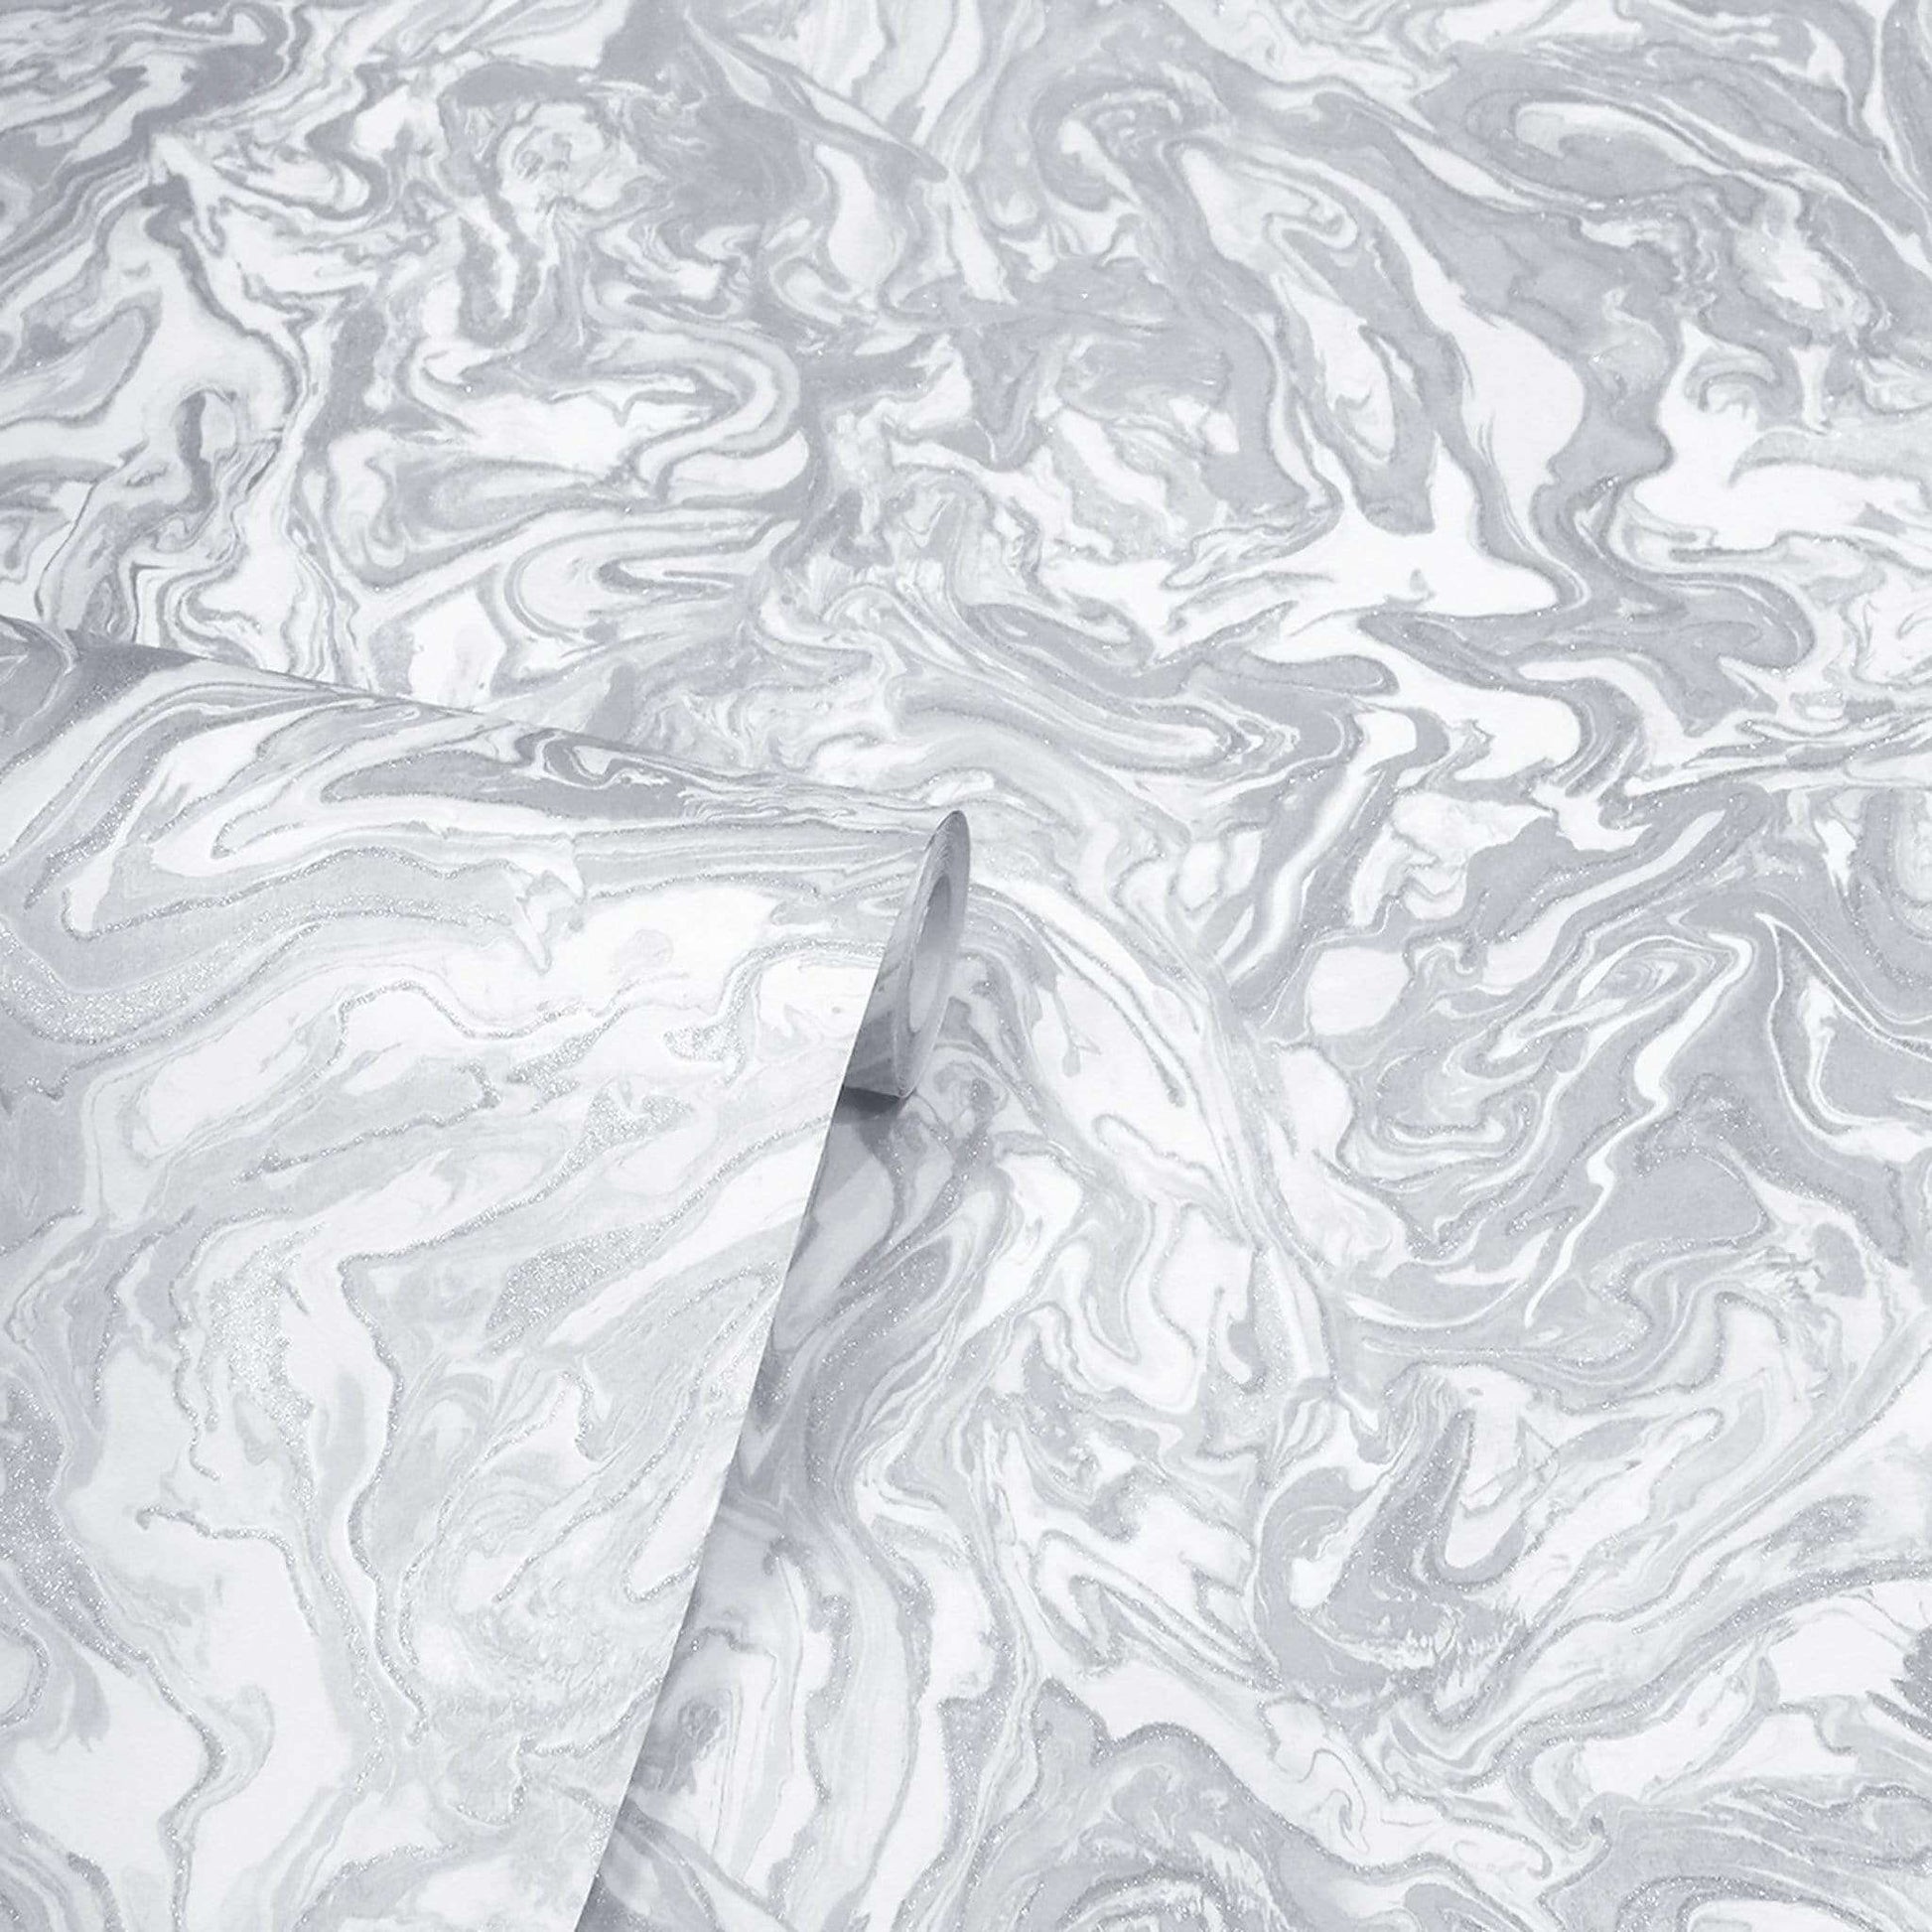 Wallpaper  -  Arthouse Liquid Marble Grey Wallpaper - 693901  -  50156229